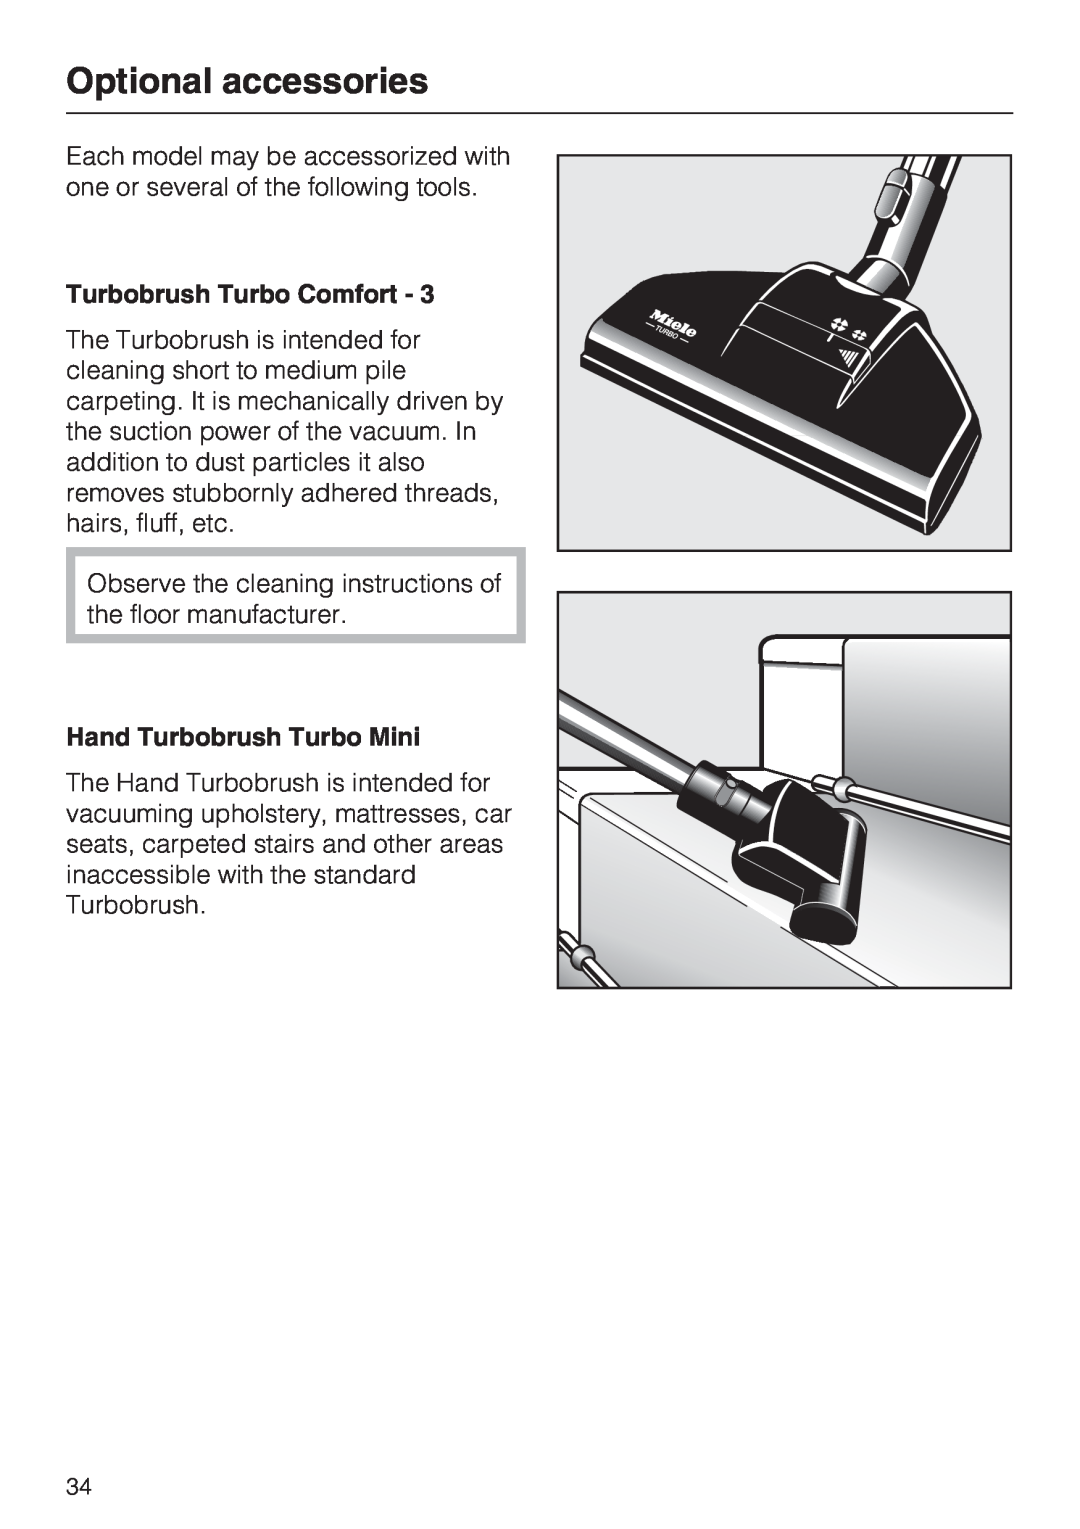 Miele S 4002 manual Optional accessories, Turbobrush Turbo Comfort, Hand Turbobrush Turbo Mini 